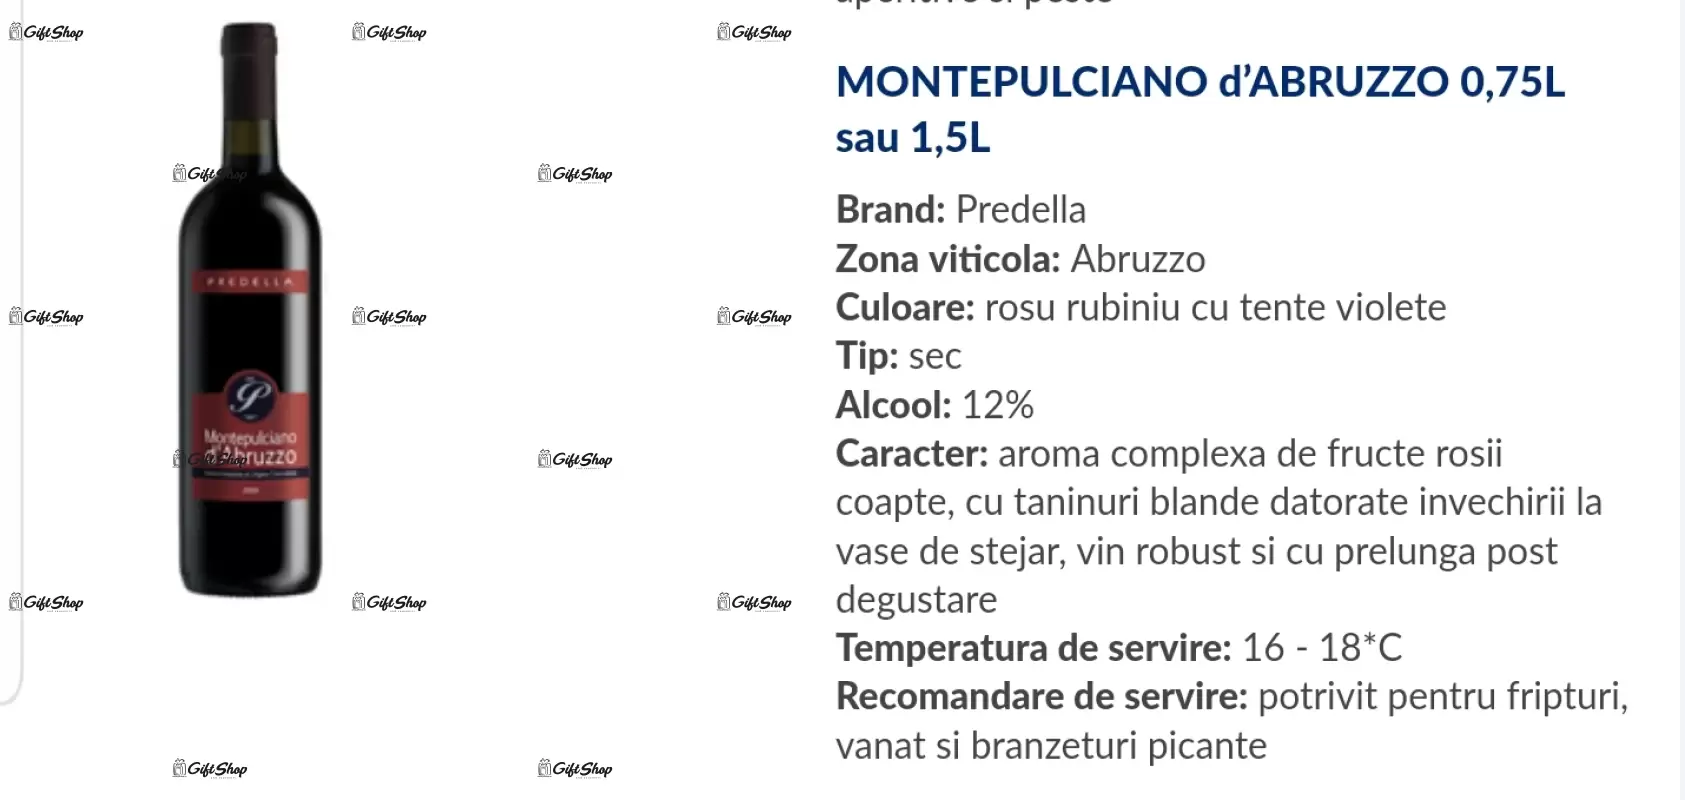 Pentru cel mai bun doctor veterinar, editie limitata, rosu predellea abruzzo, sec, 12.5% alc.